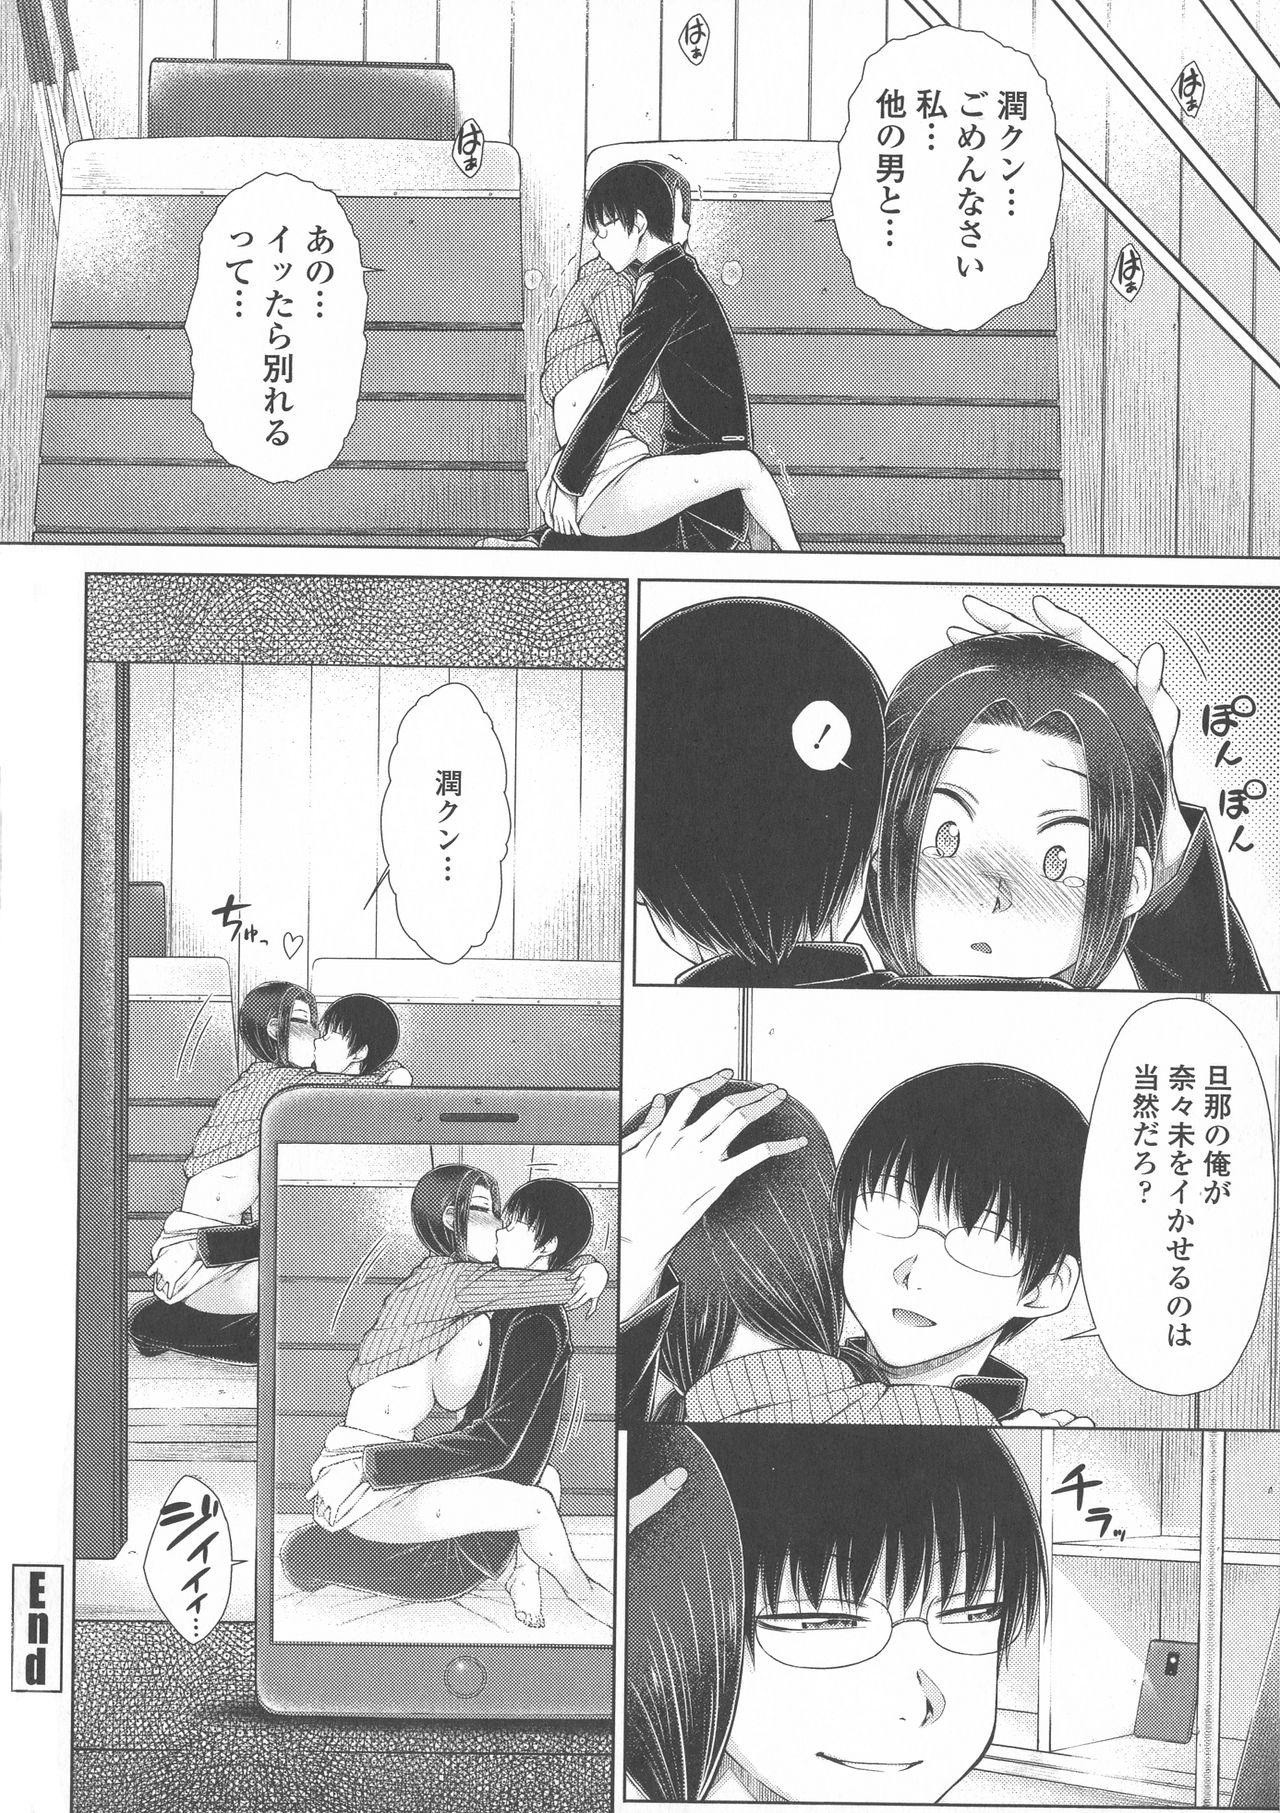 Maru Maru Maru Suki na Boku no Yome ga Onna Kyoushi na Ken - She likes sexual intercourse in wives. 153